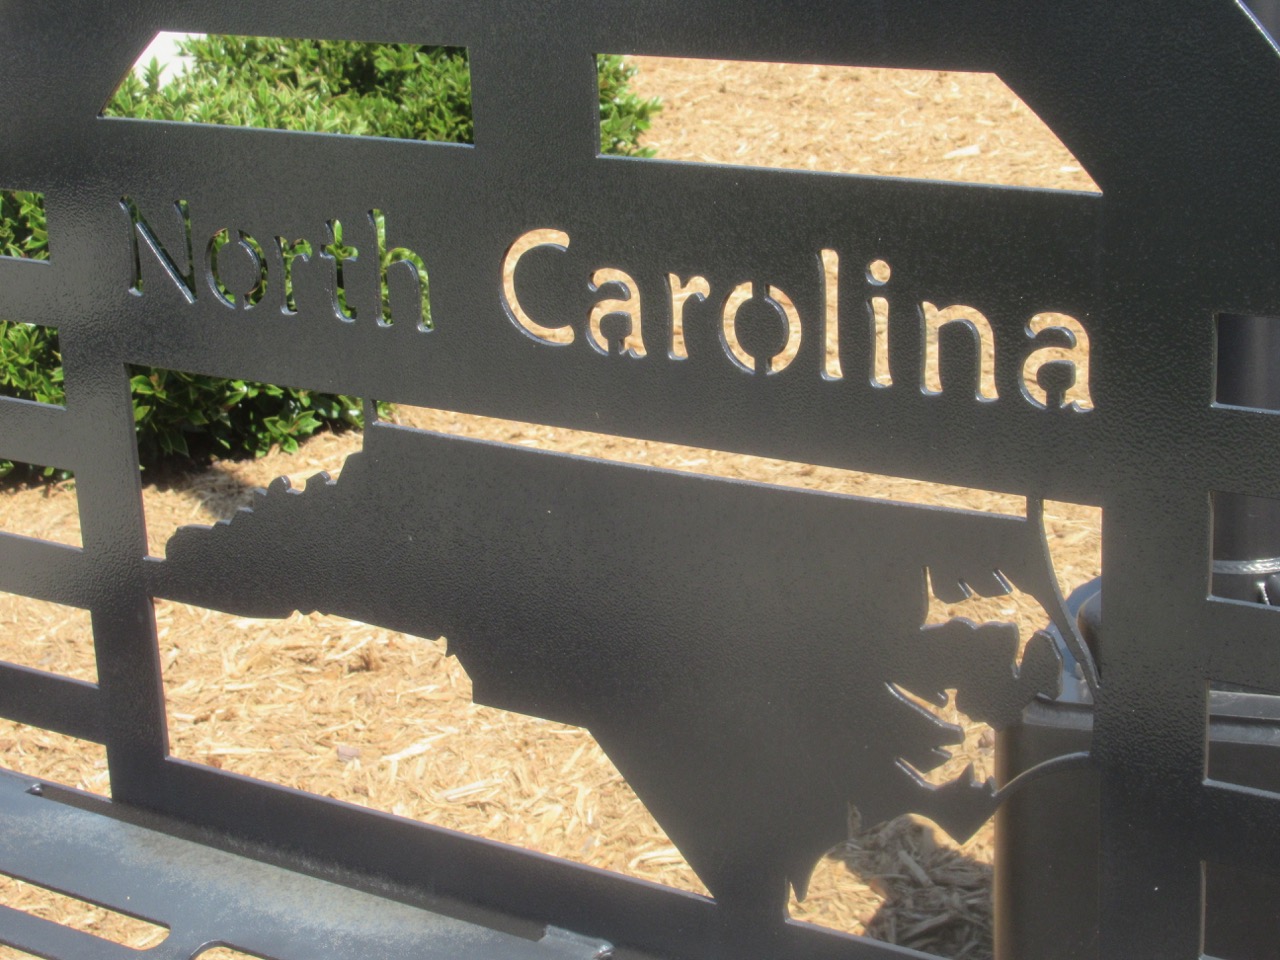 North Carolina bench